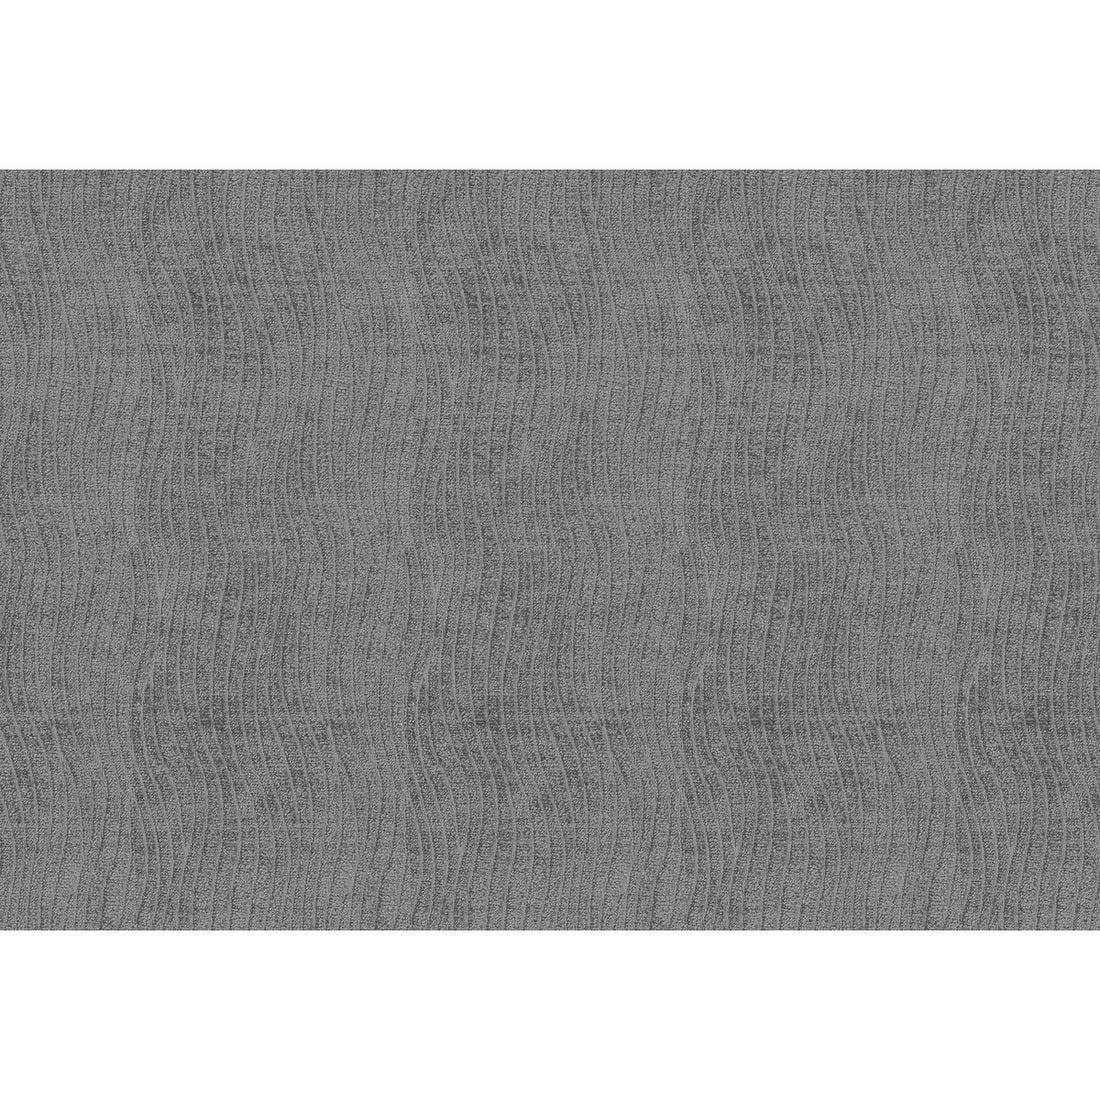 Kravet Smart fabric in 34296-11 color - pattern 34296.11.0 - by Kravet Smart